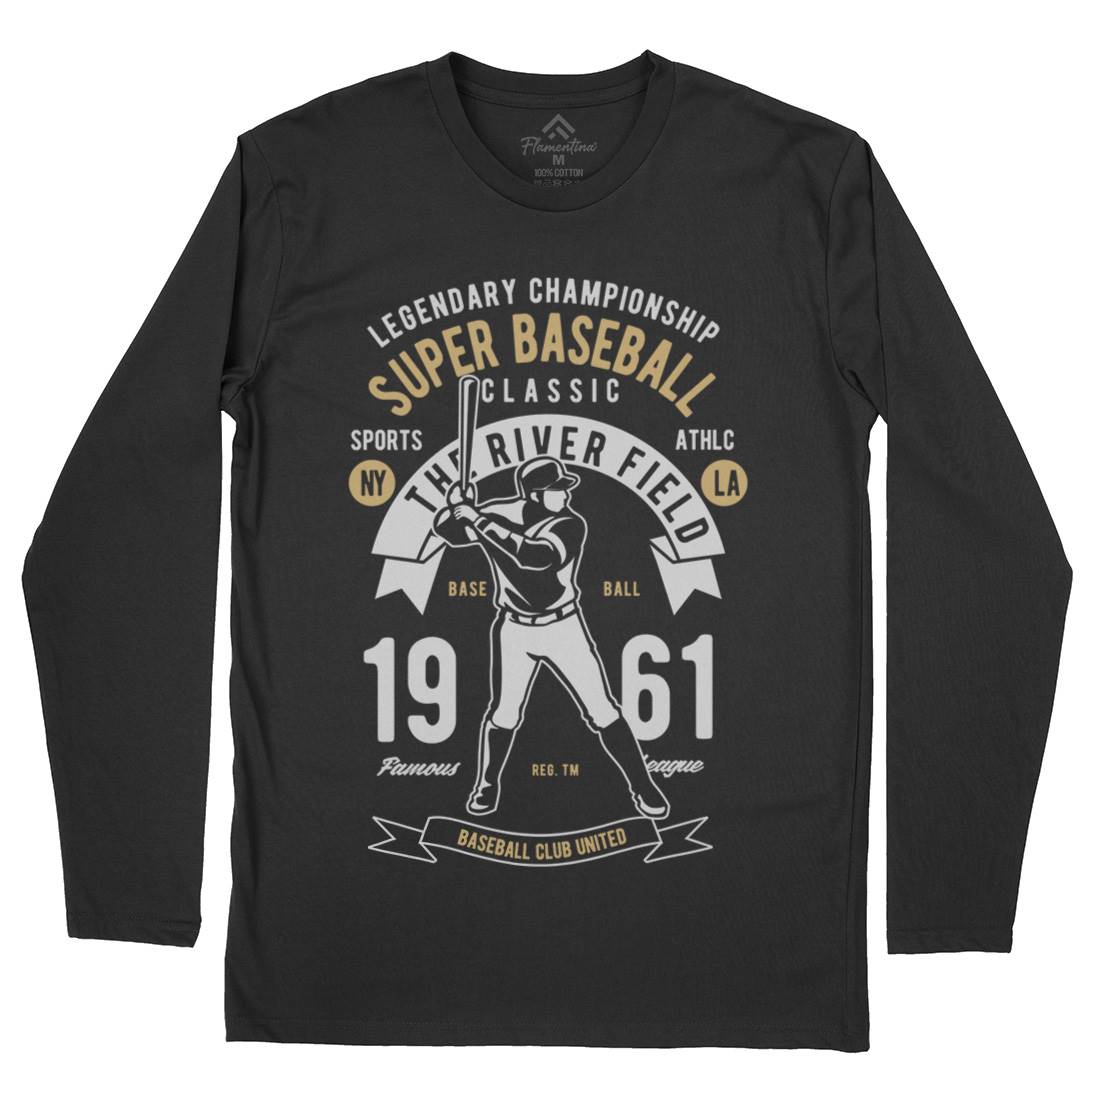 Super Baseball Mens Long Sleeve T-Shirt Sport B455